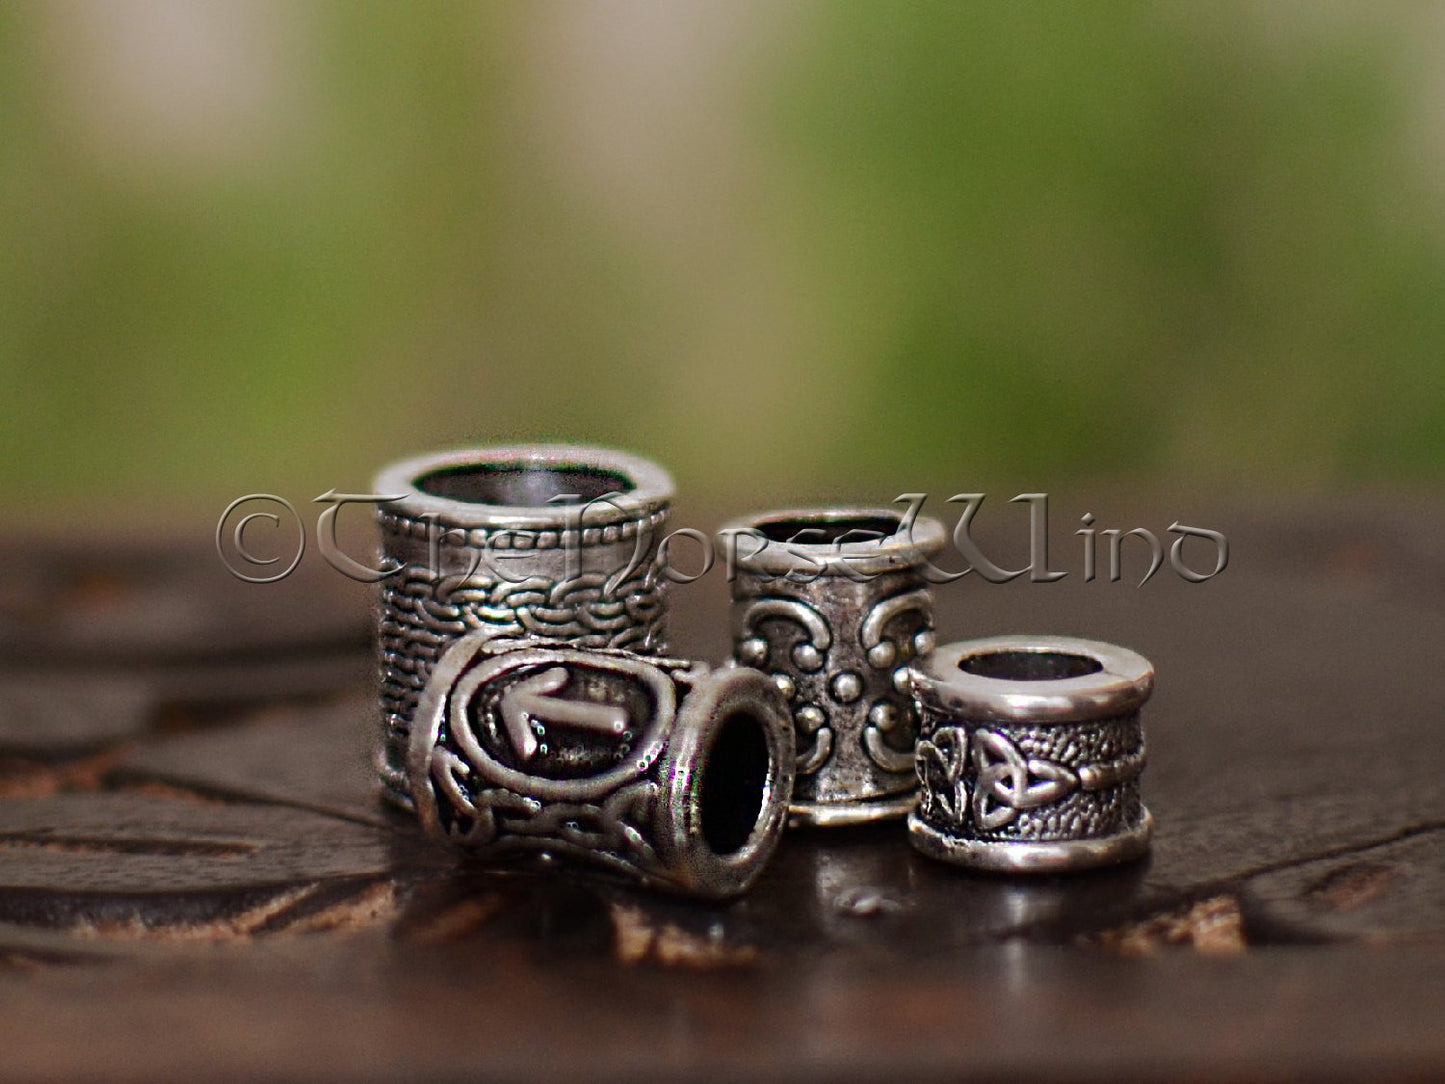 Viking Beard Rings - Set of 4 Beads #1 TheNorseWind